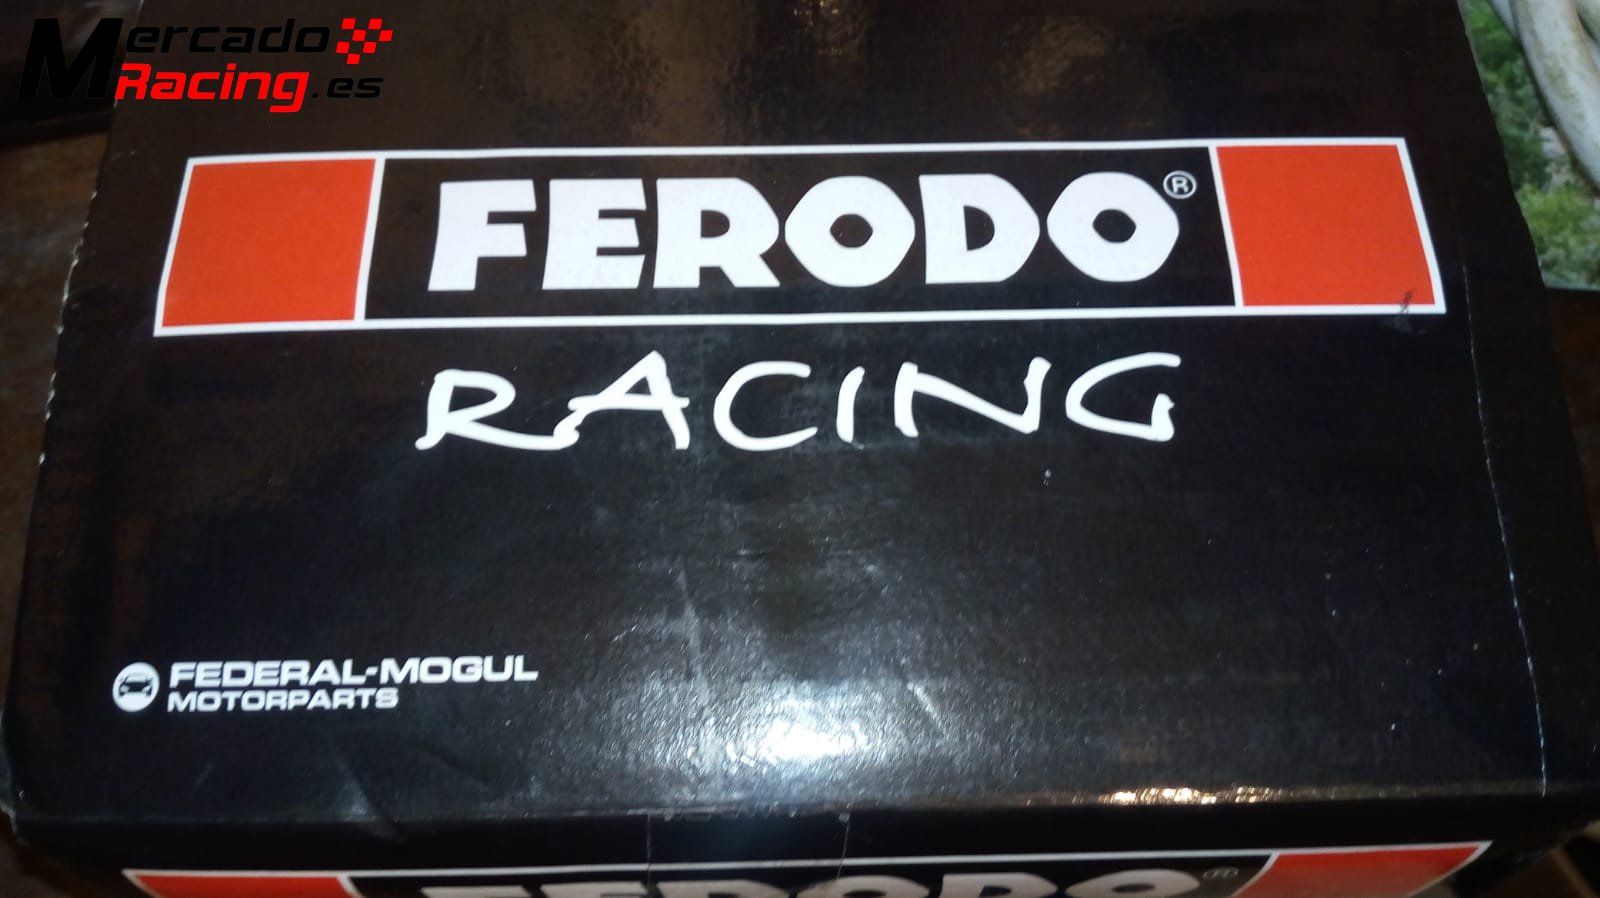 Pastillas ferodo racing ds3000